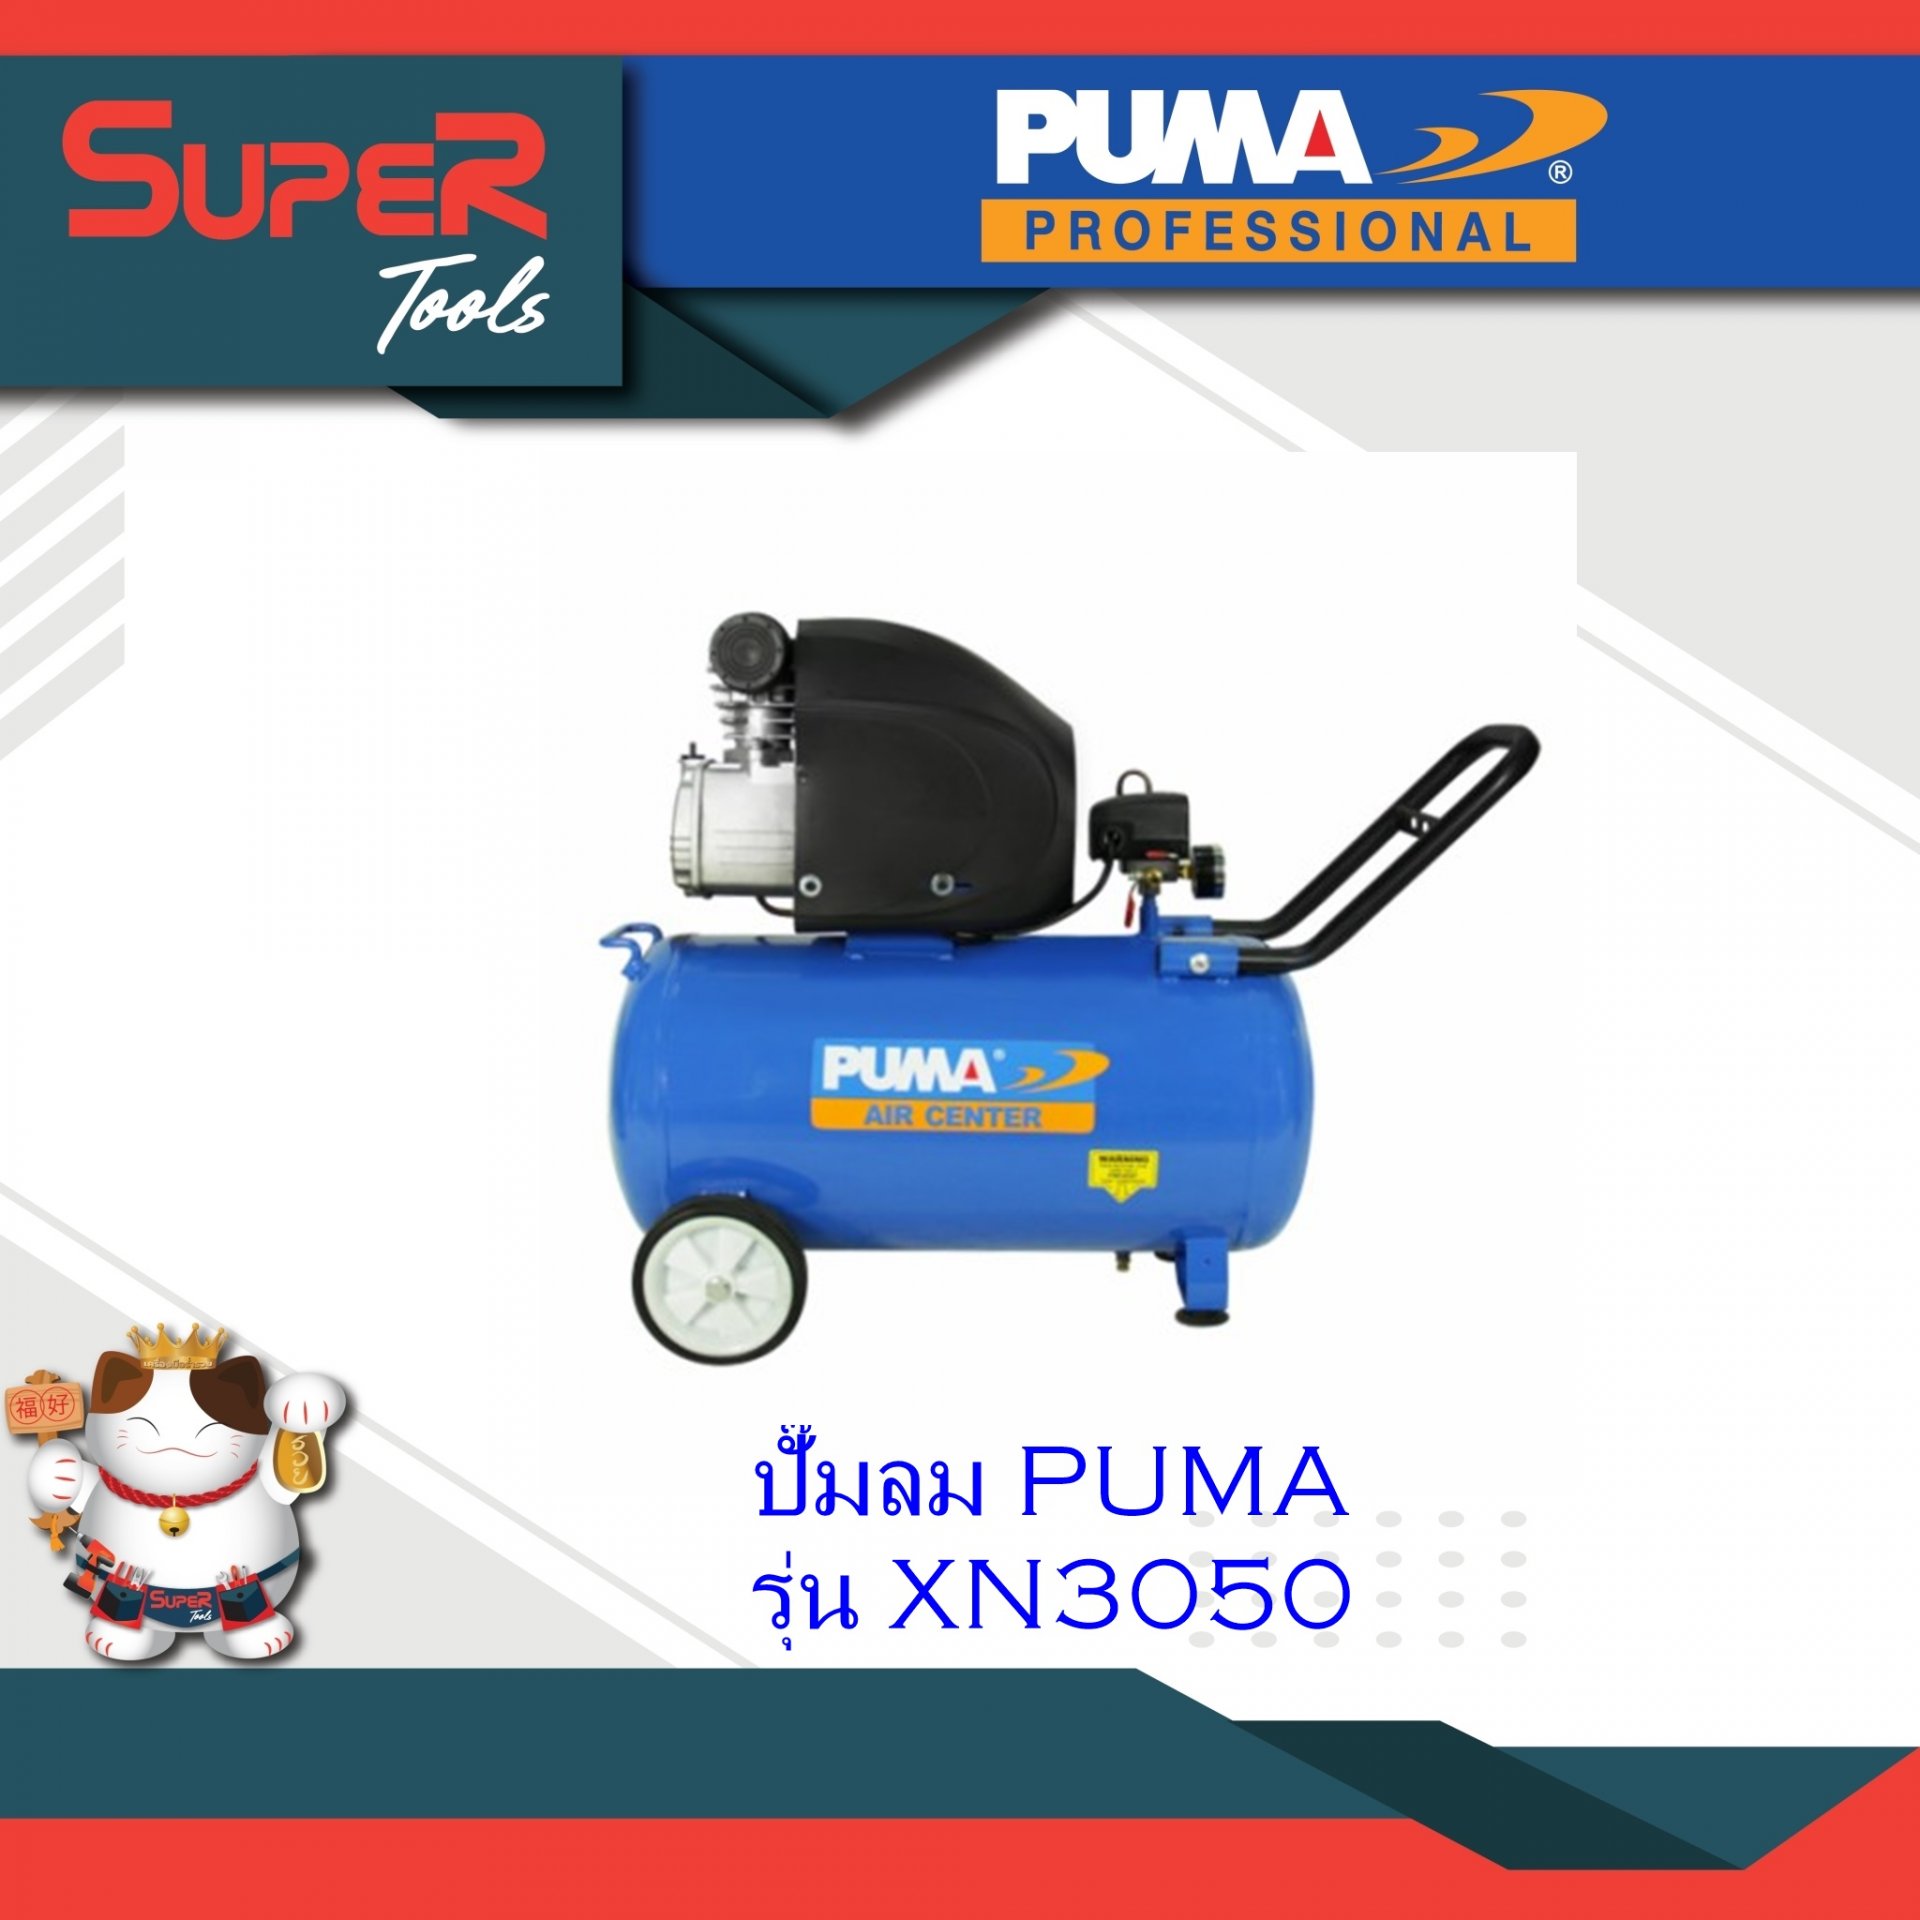 PUMA ปั๊มลมระบบขับตรง Direct-drive Air Compressor รุ่น XN3050